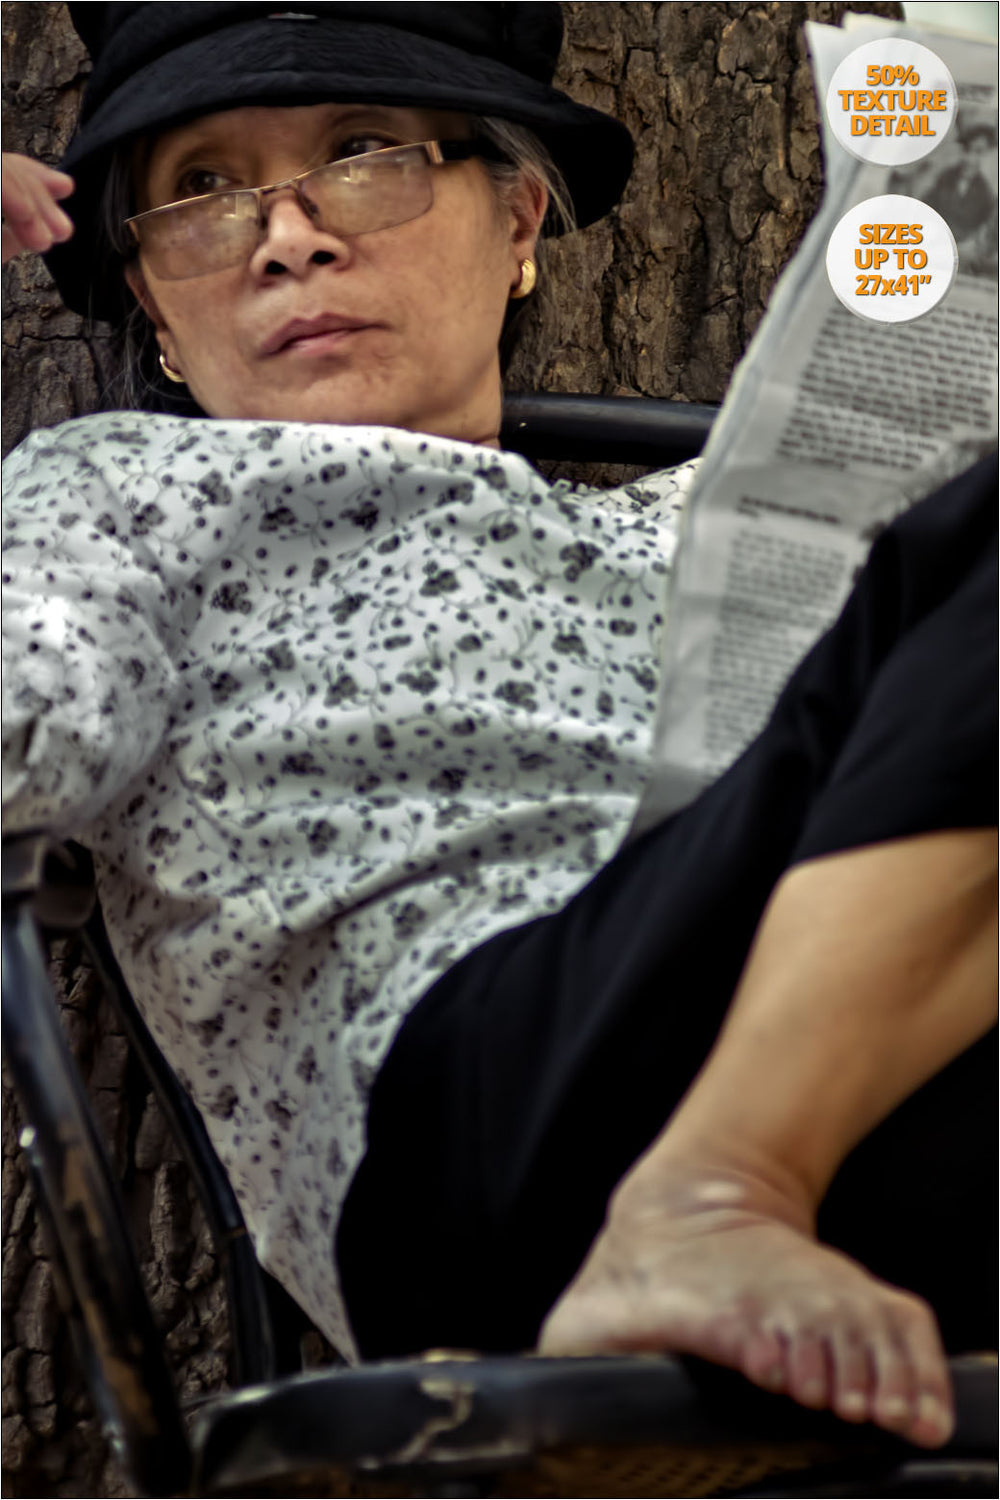 Portrait of woman reading the newspaper, Vietnam. | 50% Magnification Detail.